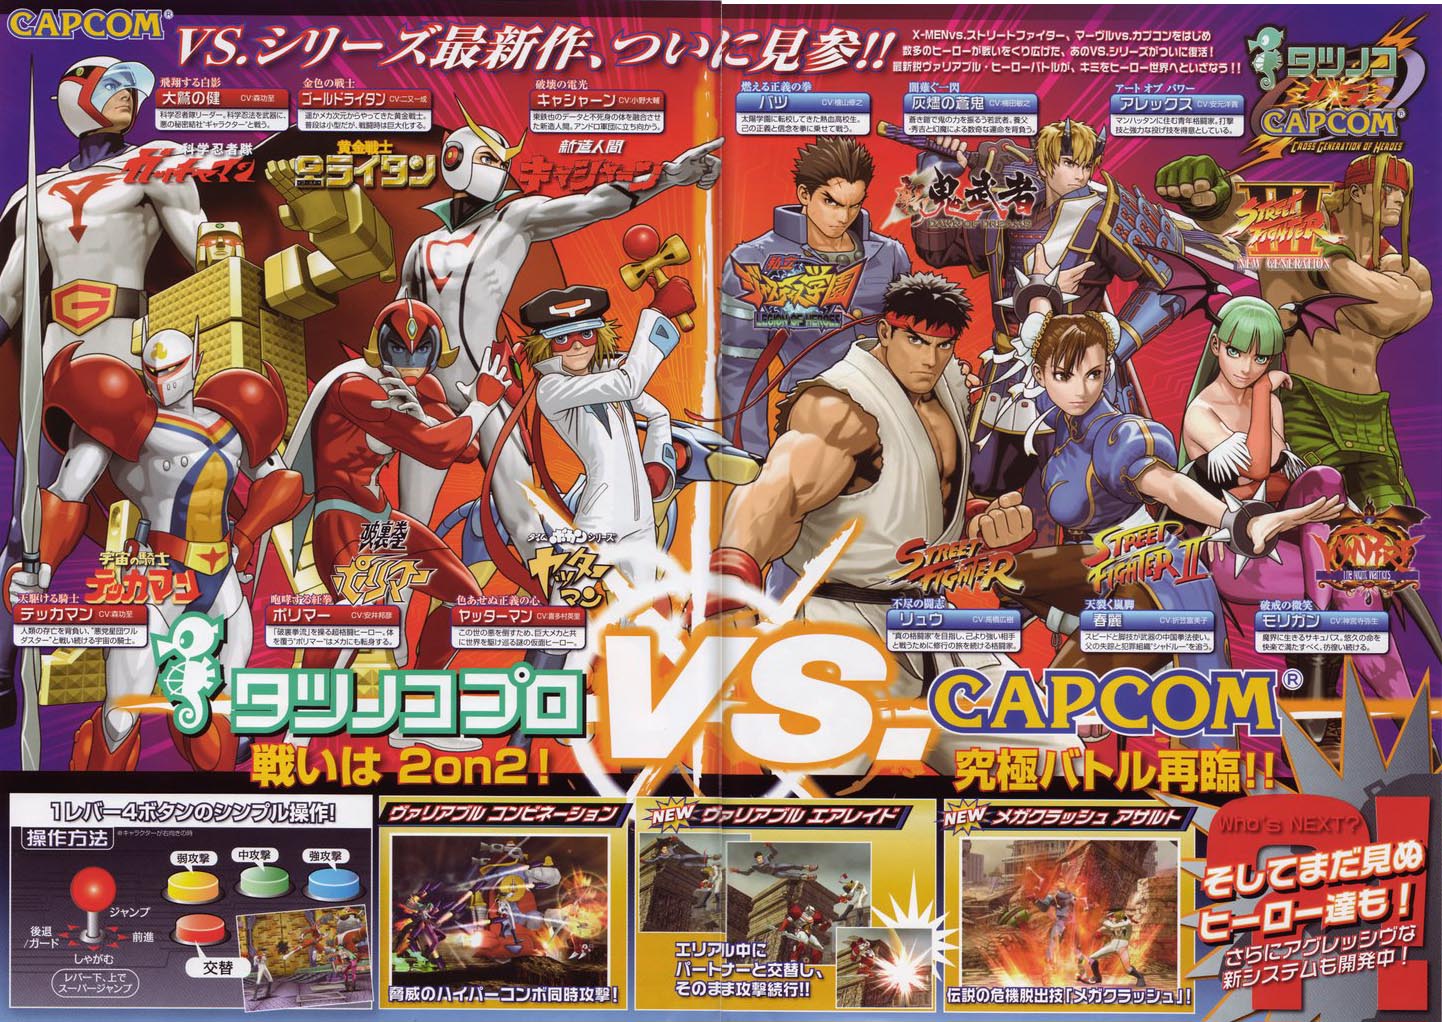 Tatsunoko Vs. Capcom: Ultimate All-Stars #24